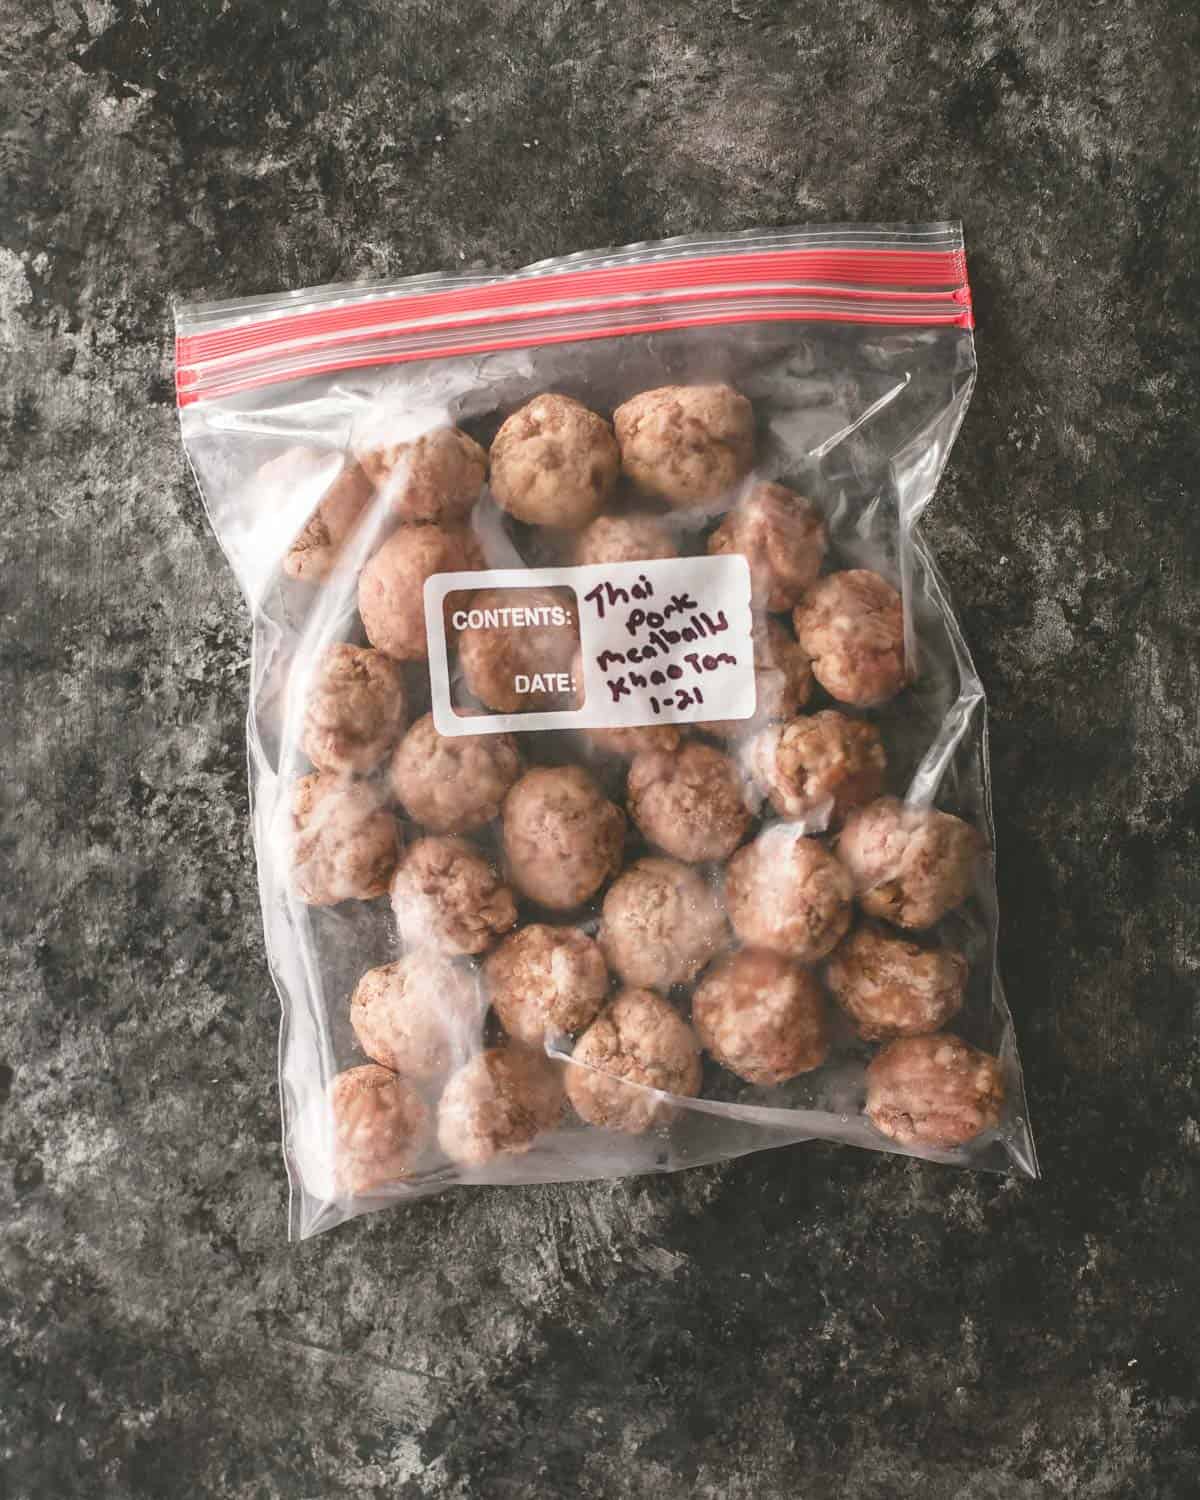 meatballs in a freezer bag